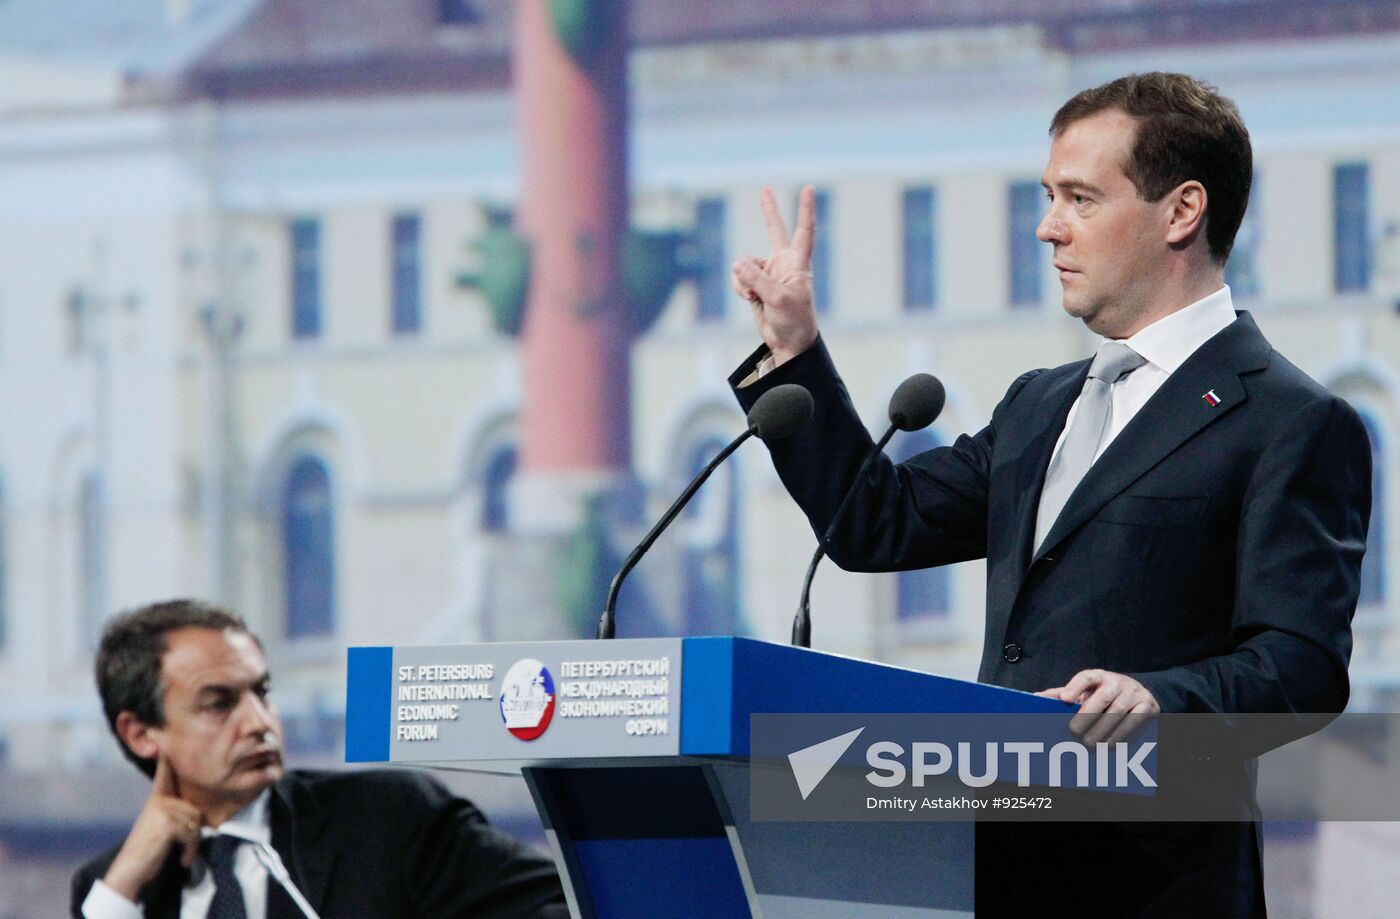 Dmitry Medvedev attends 15th SPIEF in St. Petersburg